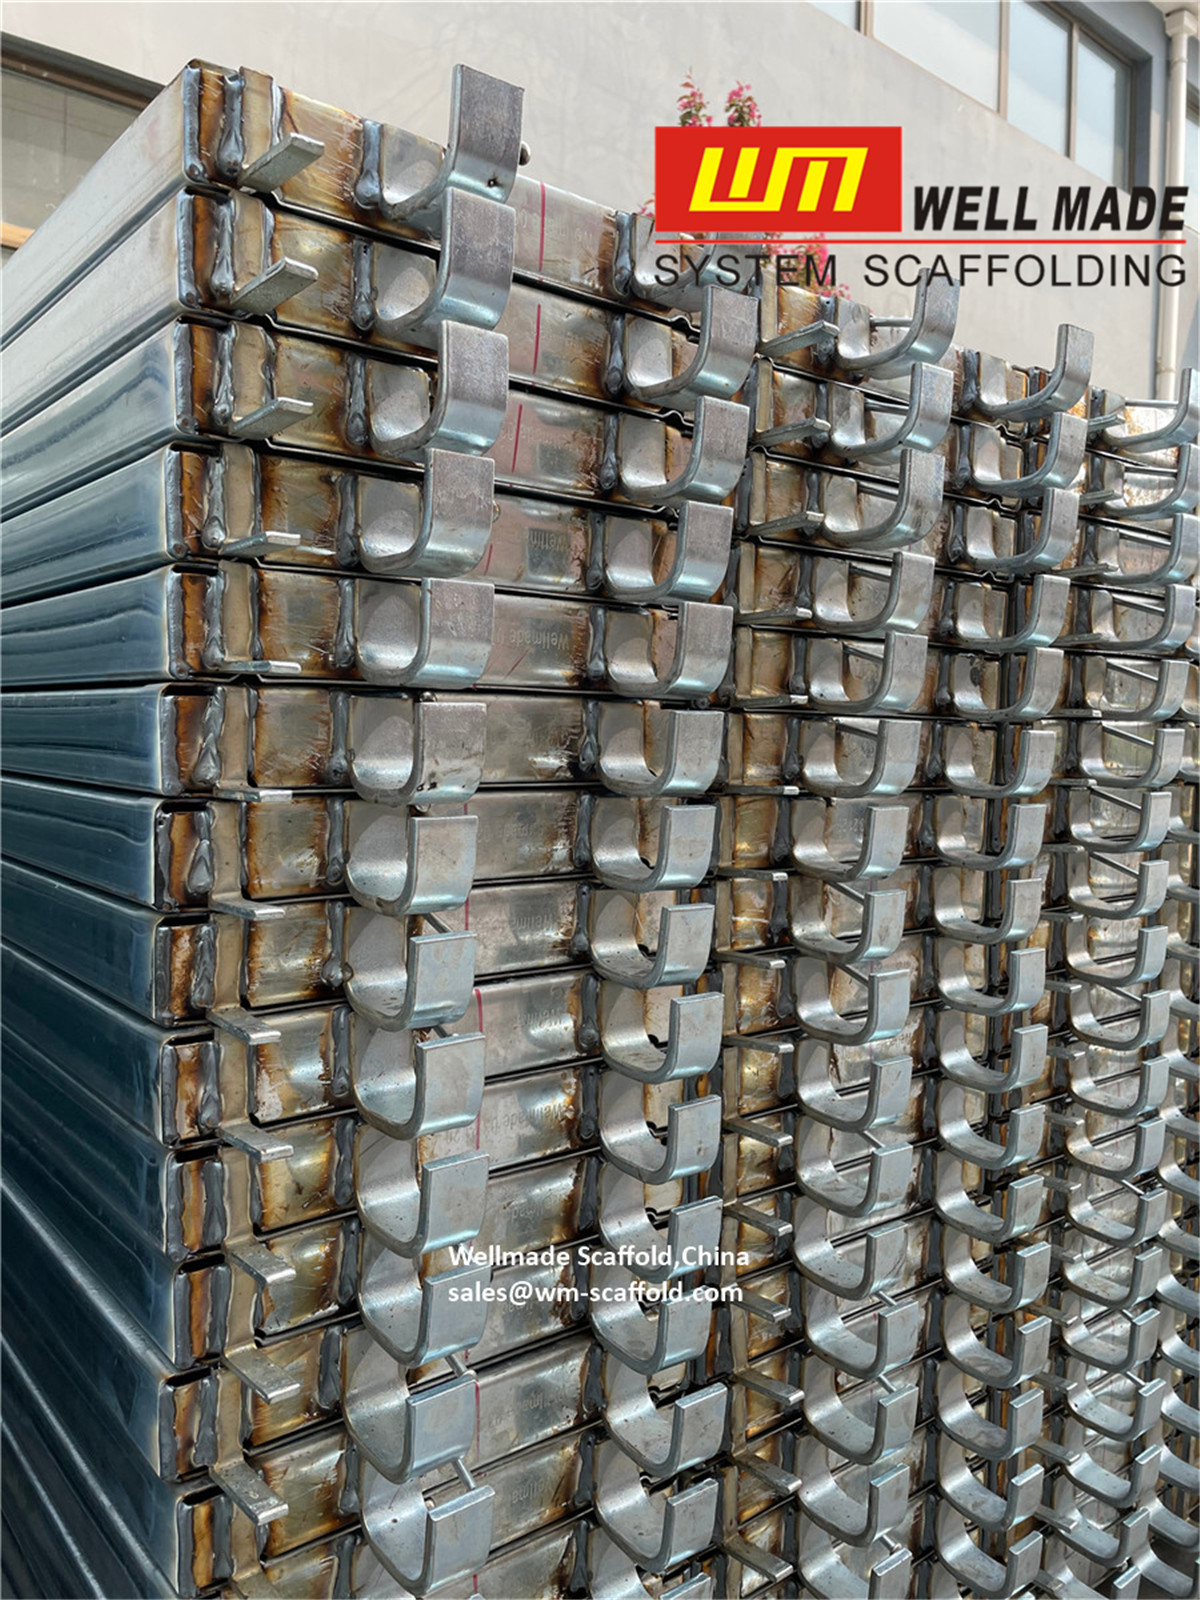 Scaffolding platform - Wellmade's ringlock scaffolding steel planks